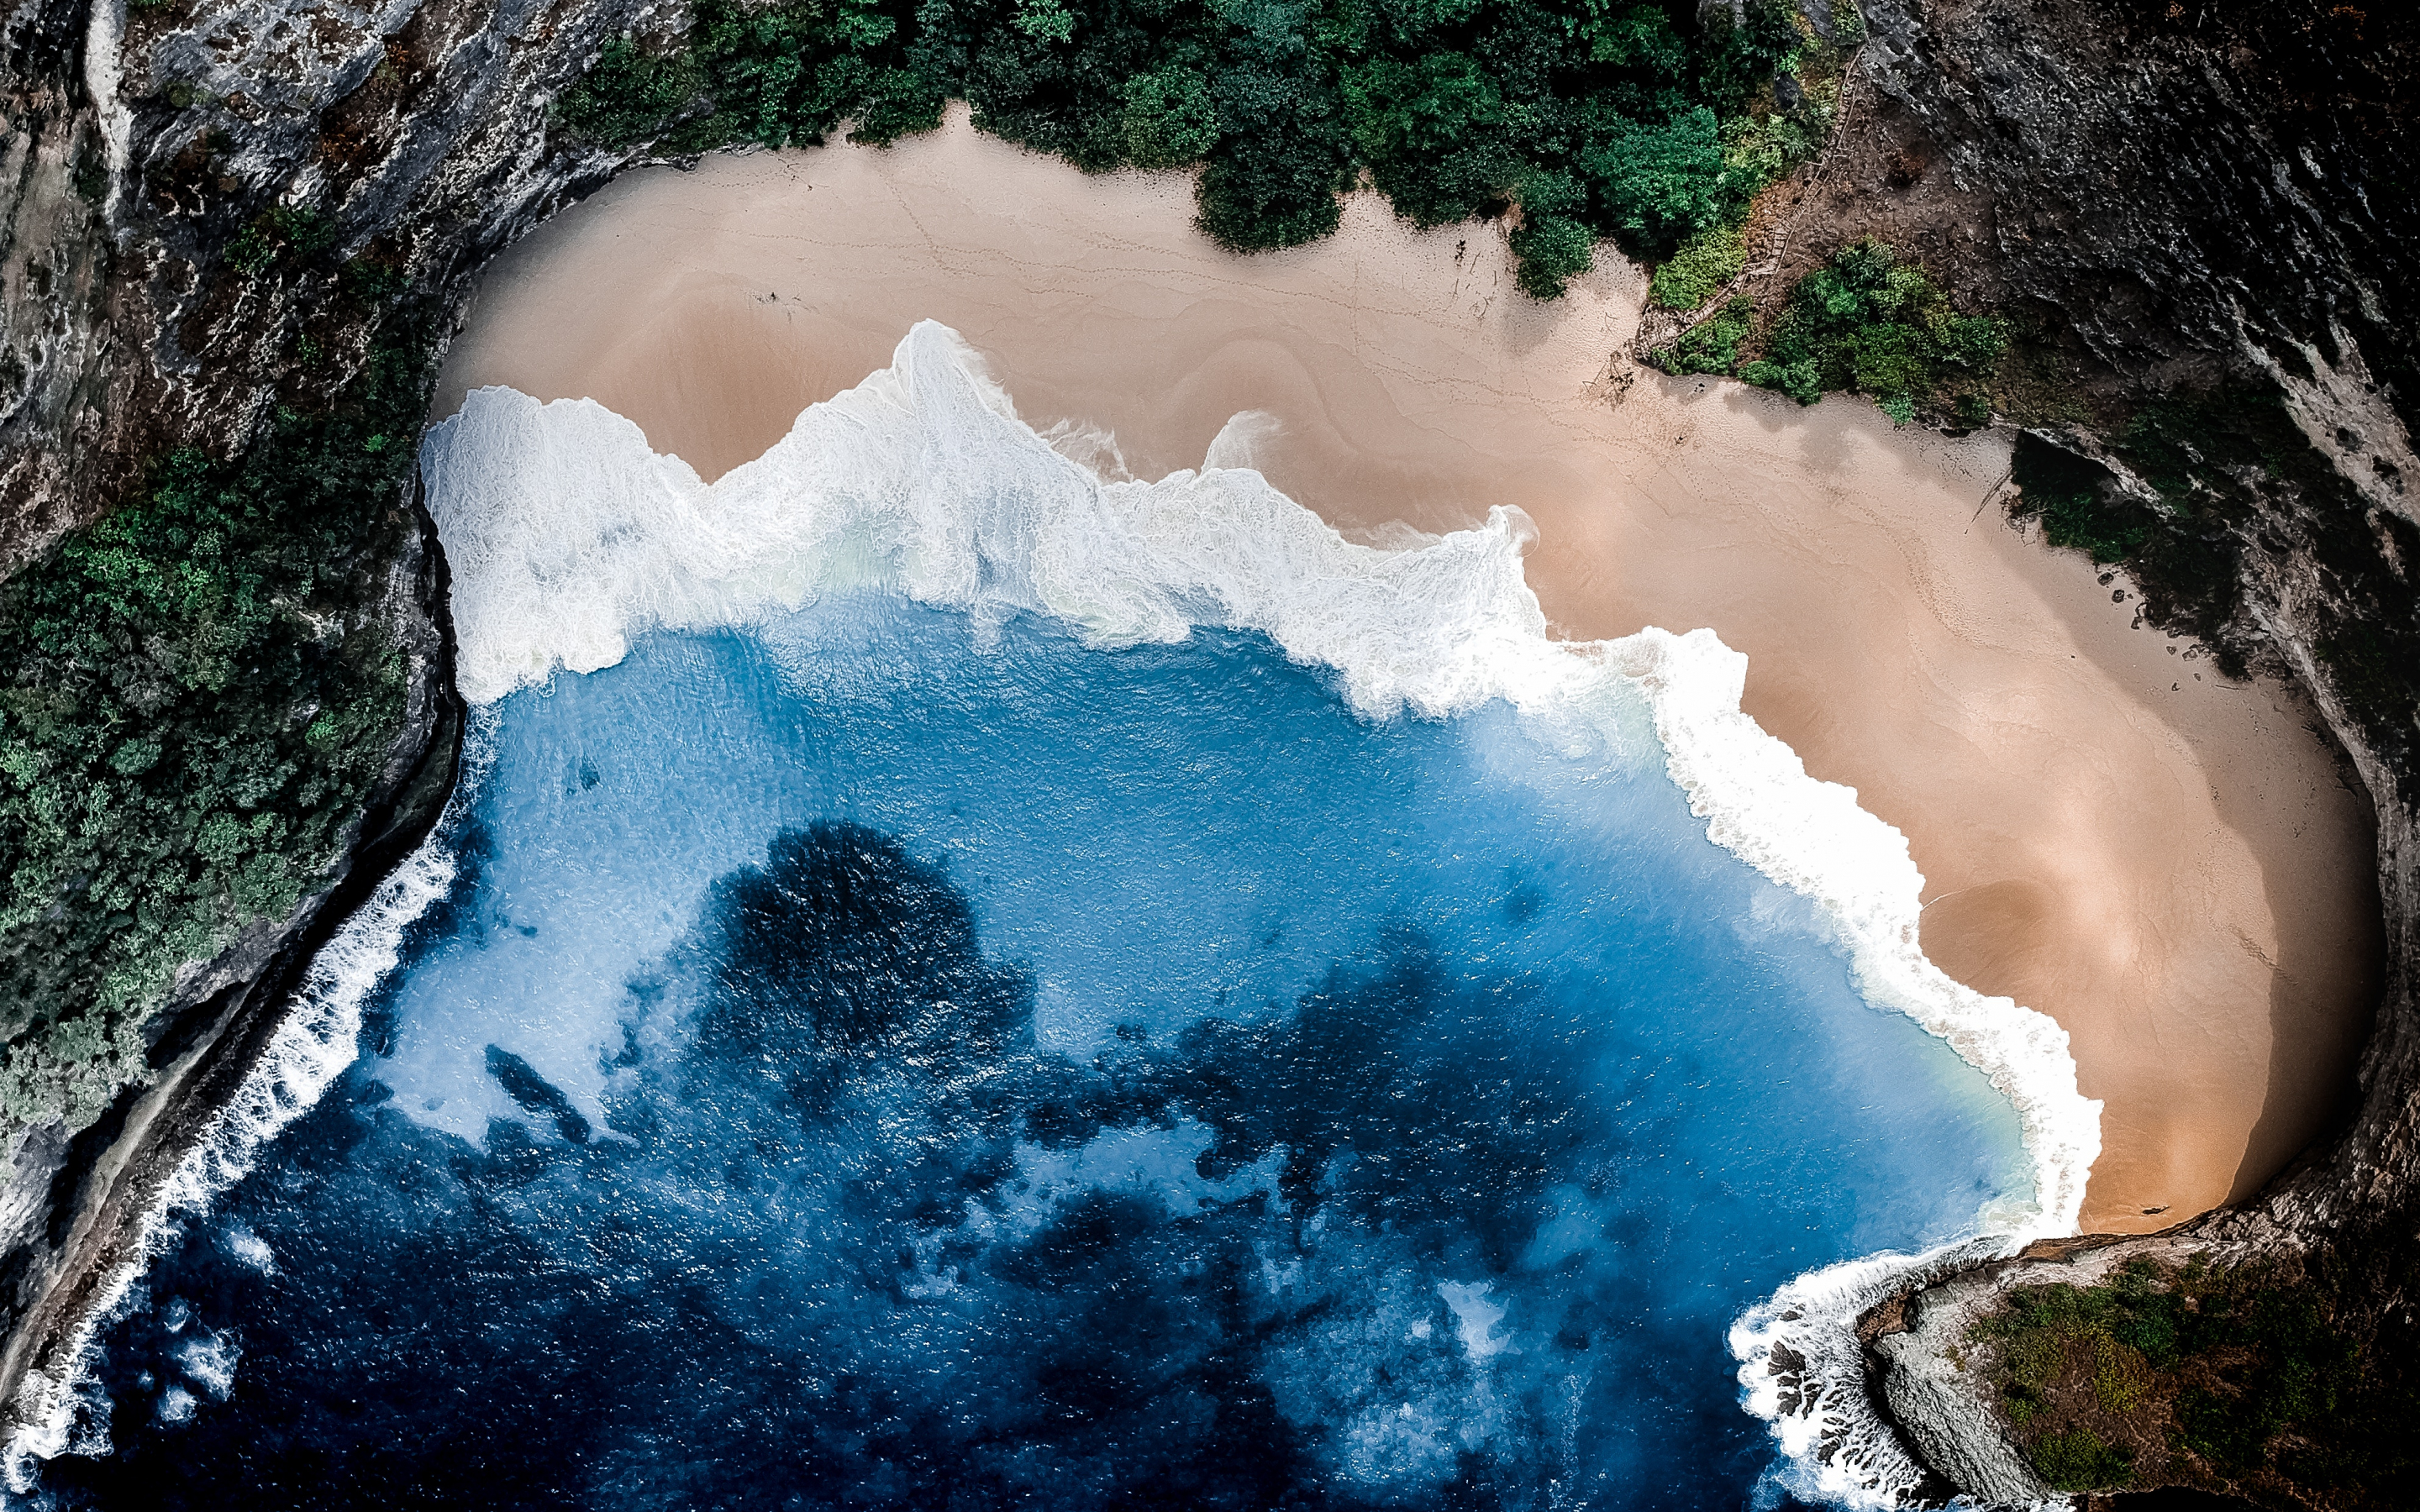 Download x1800 Wallpaper Nature Beach Coast Aerial View Mac Pro Retaia Image Background 9